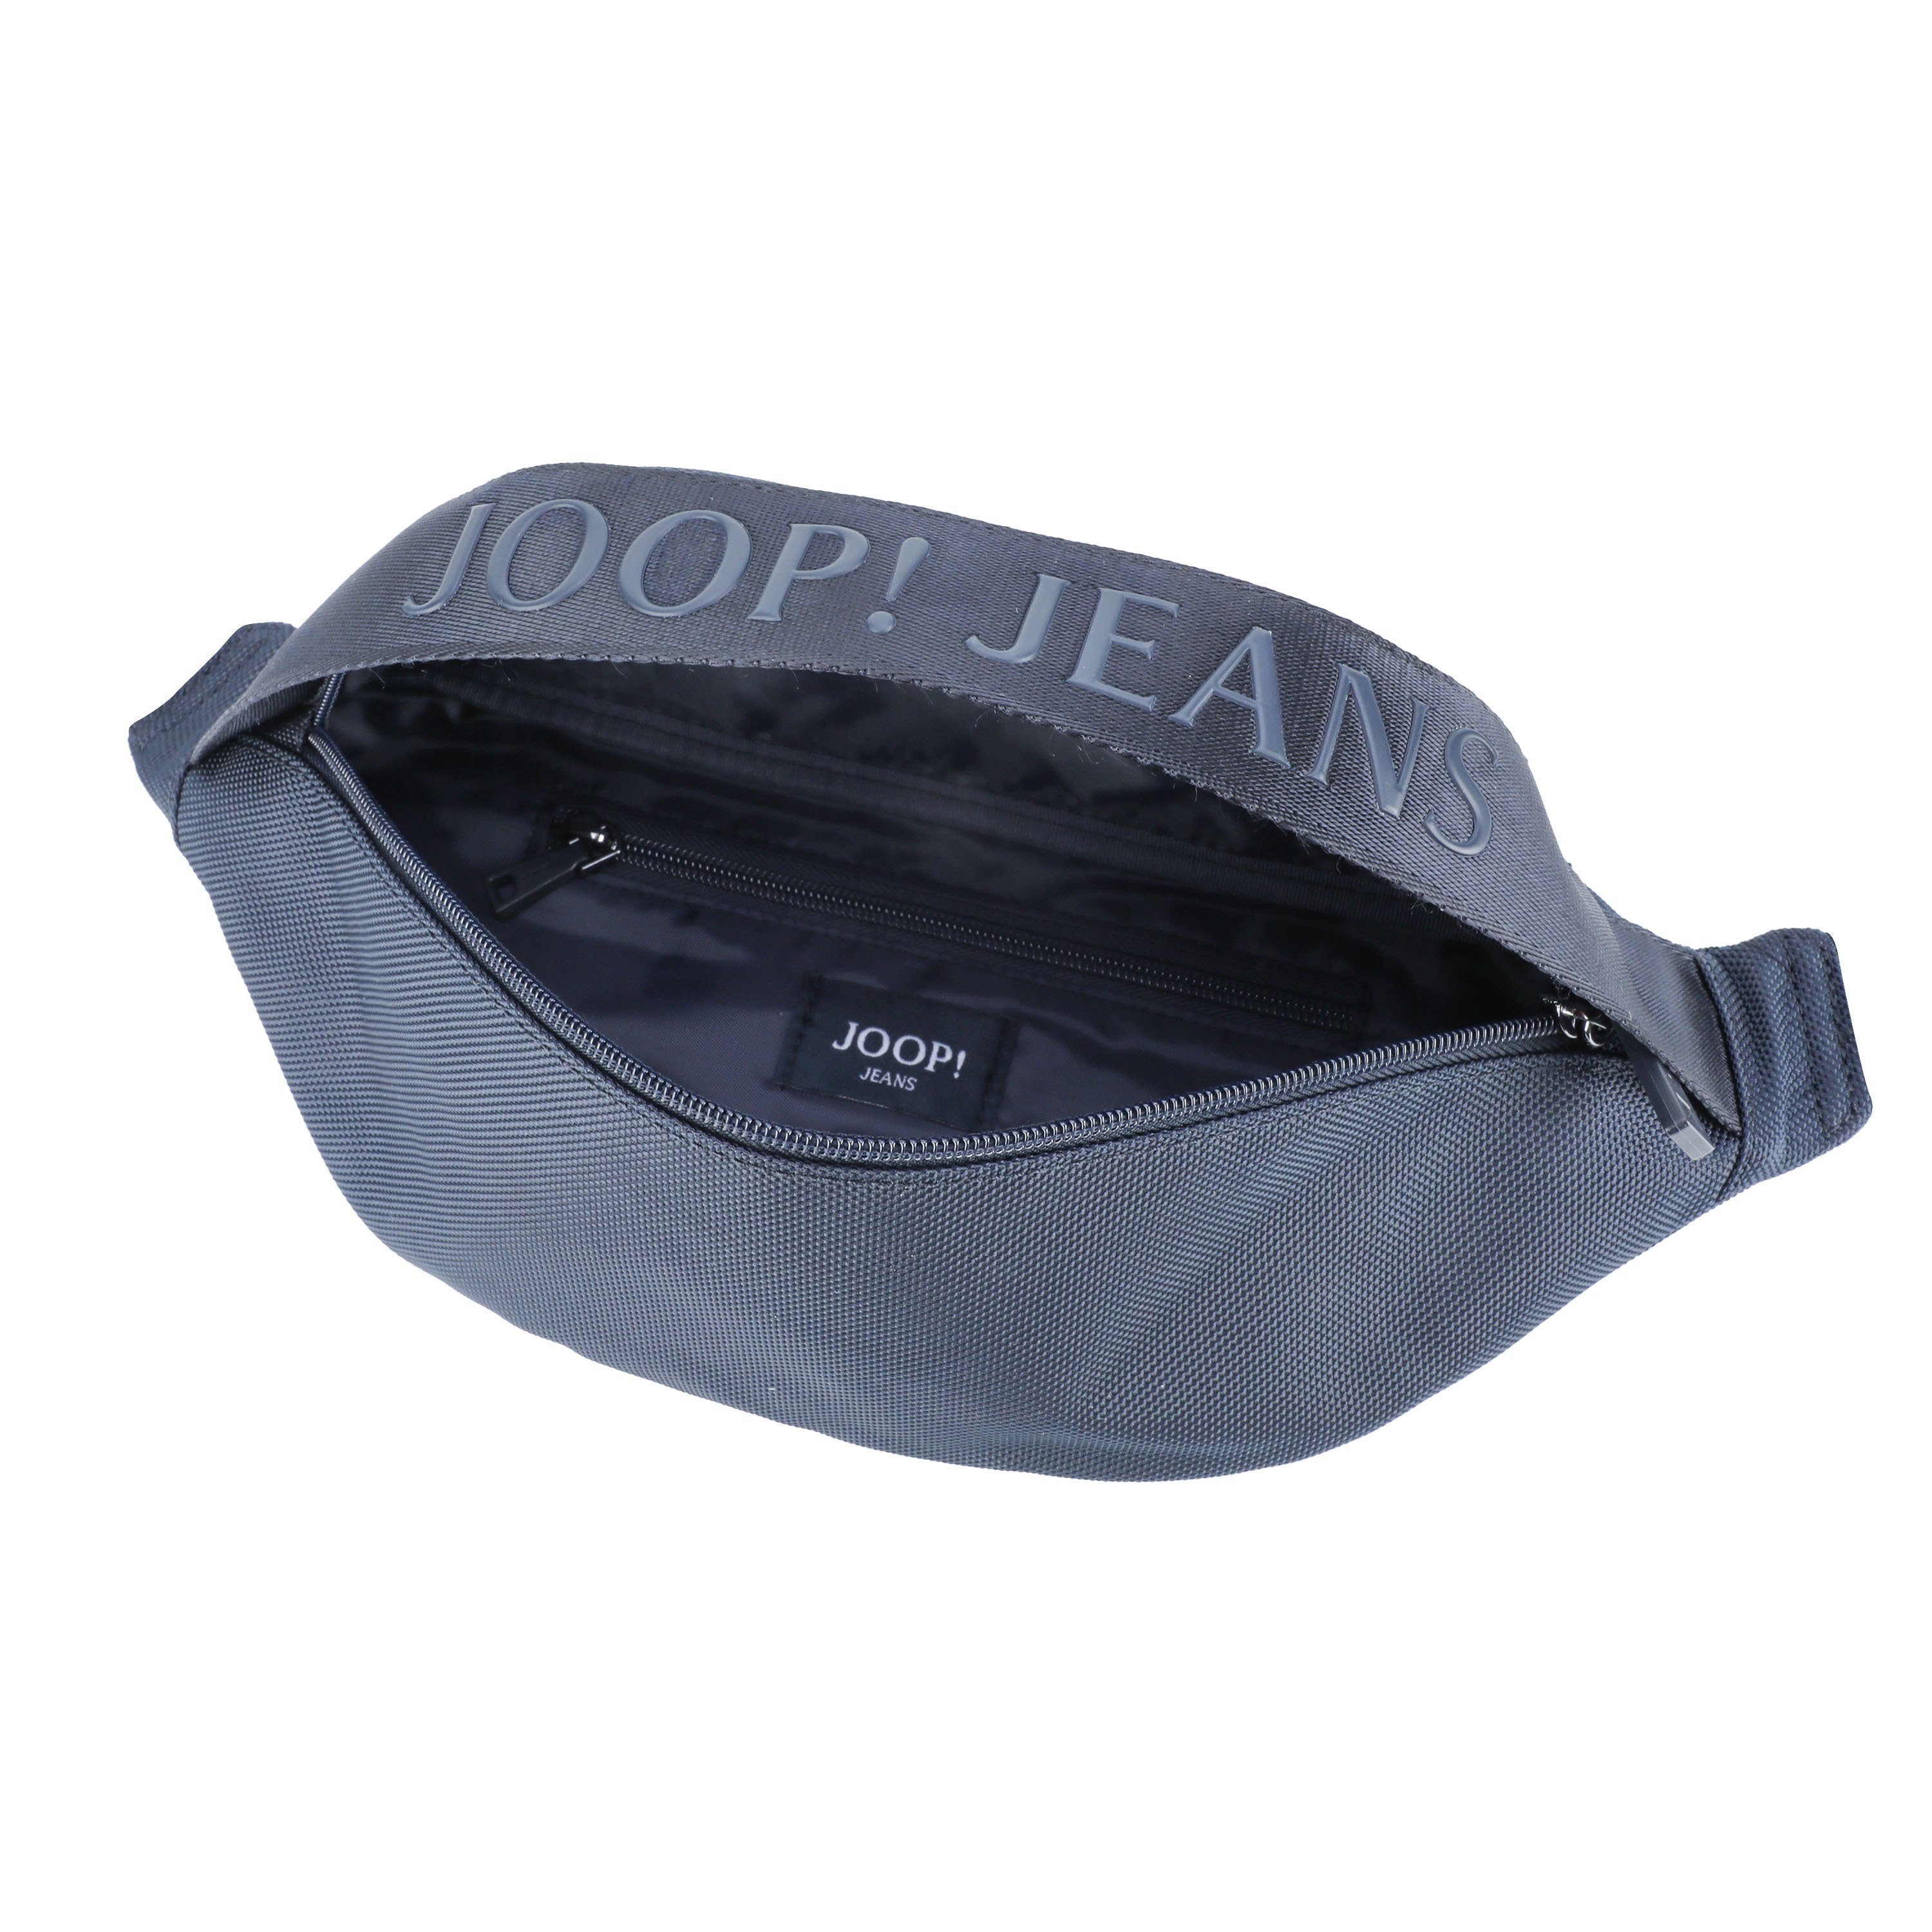 Joop Jeans Gürteltasche, mit dunkelblau zipper